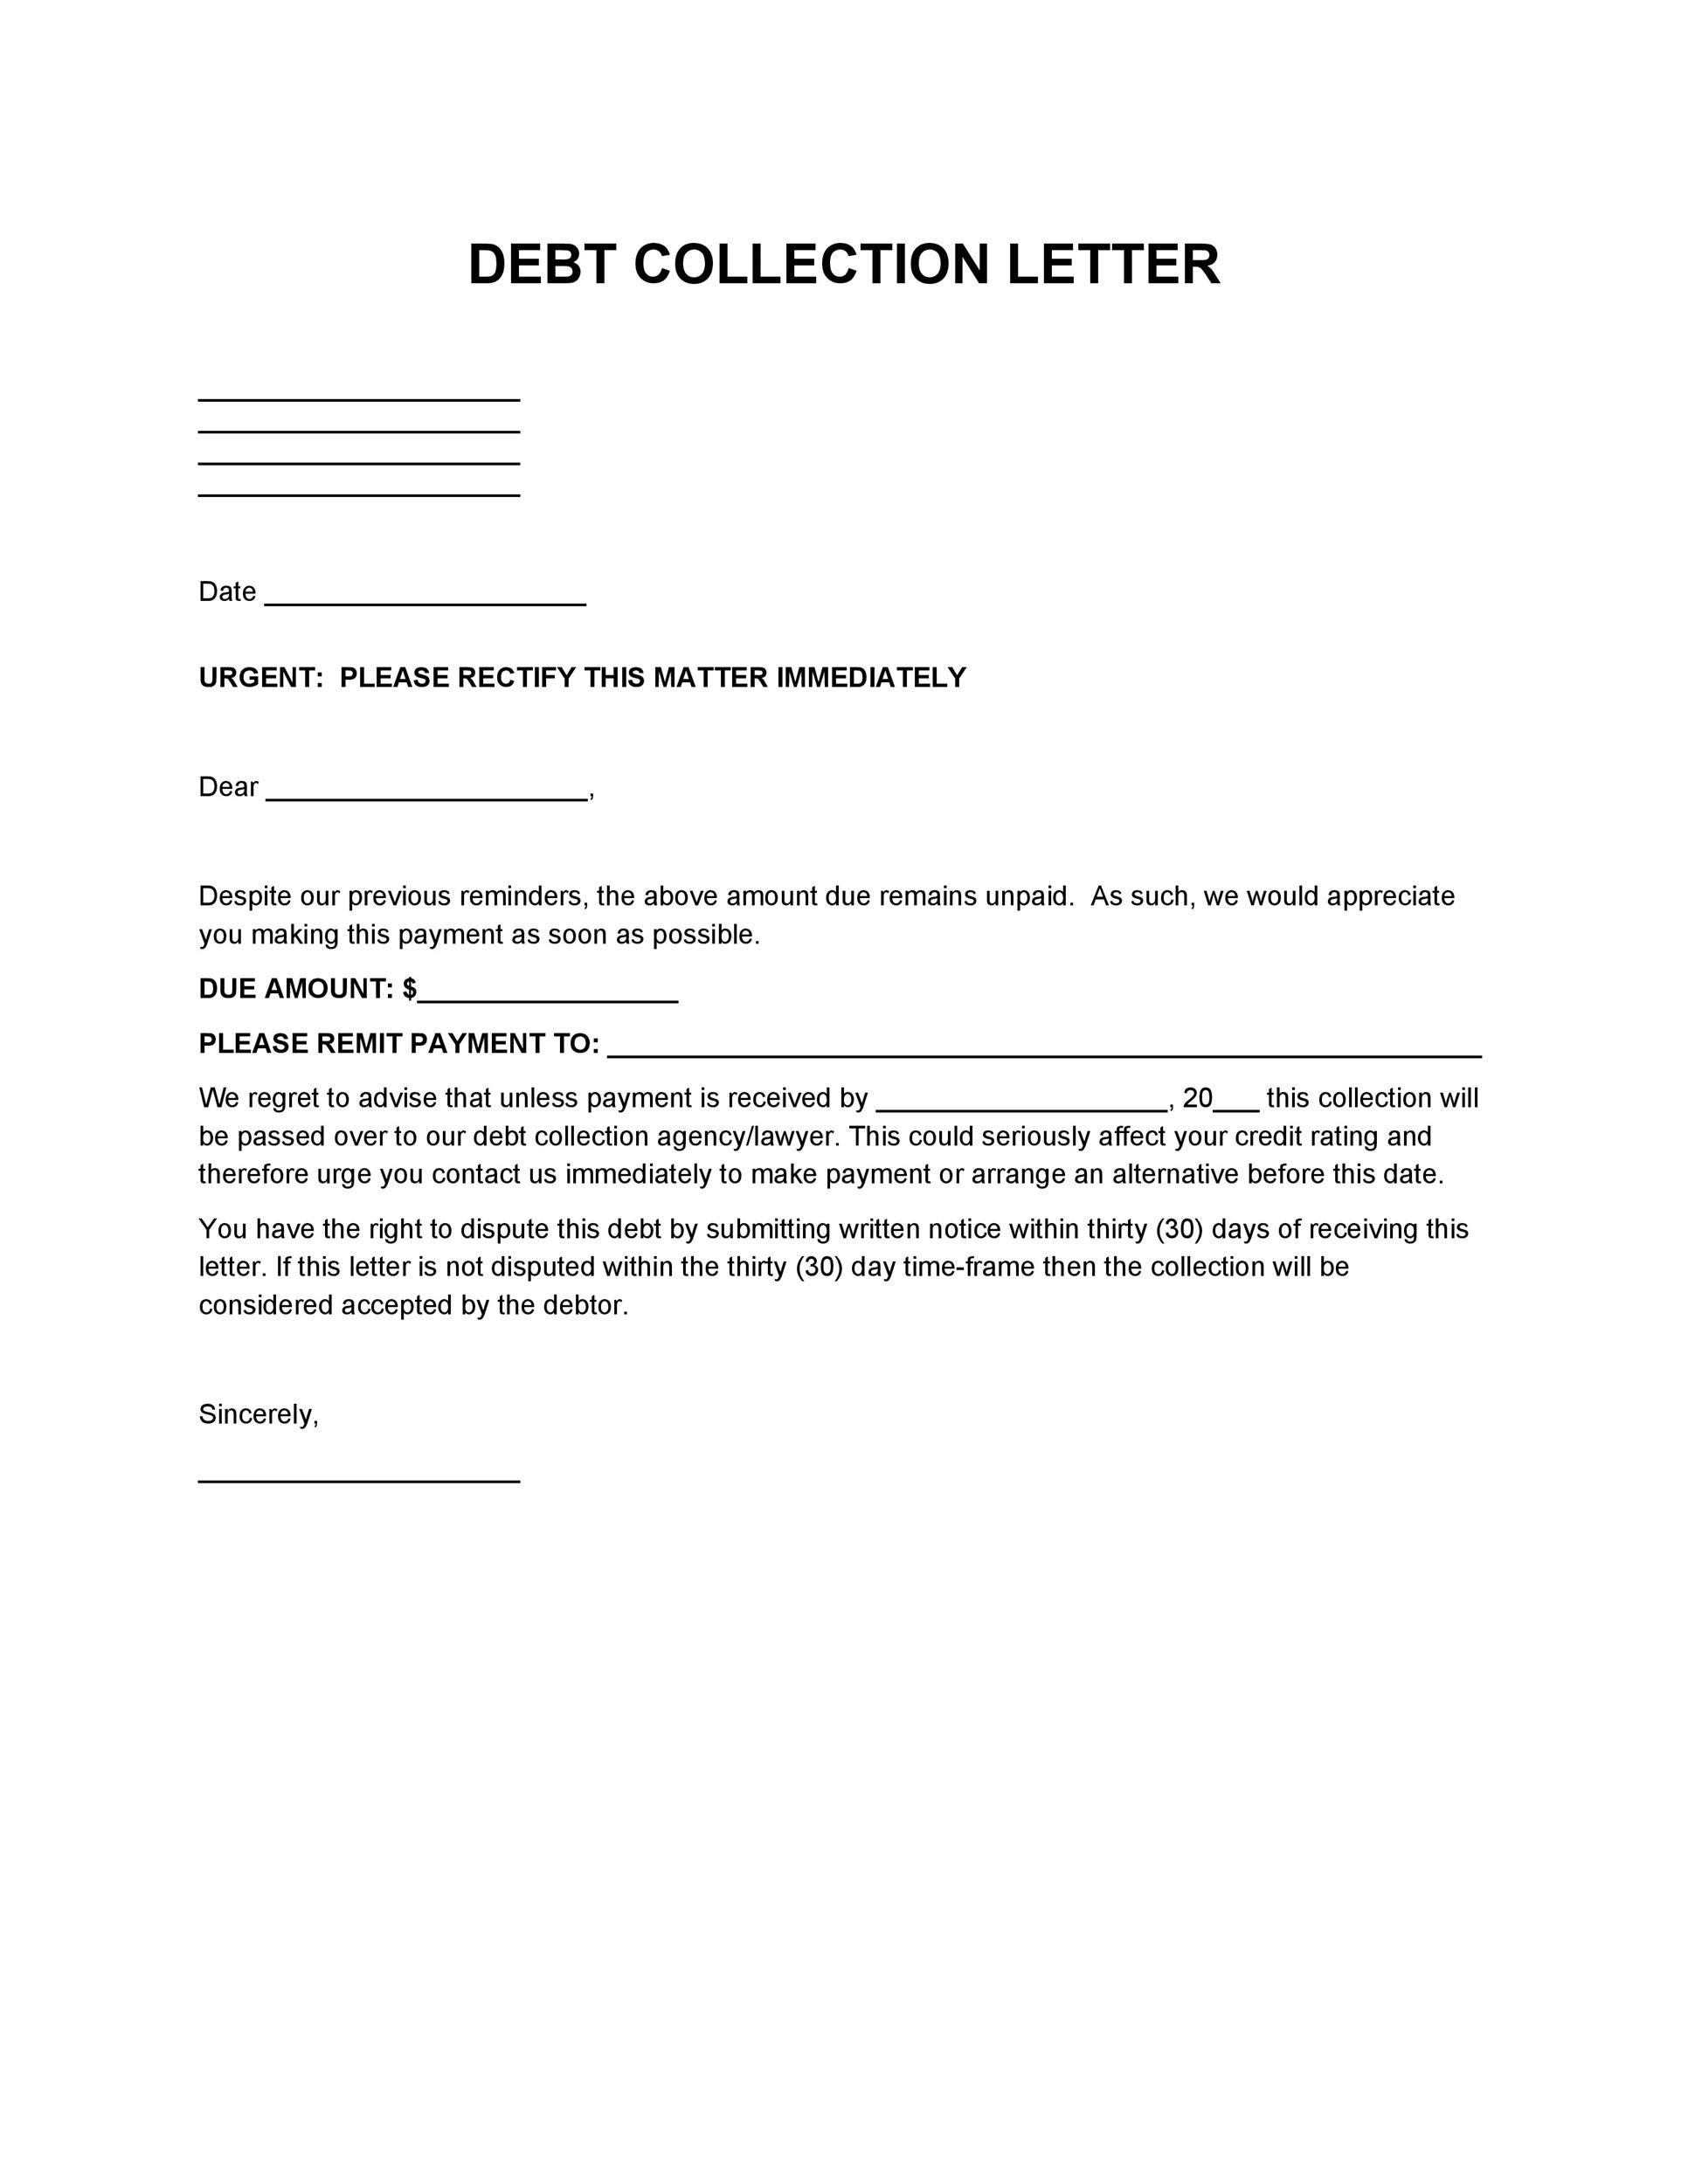 debt collection letter - Cakomo